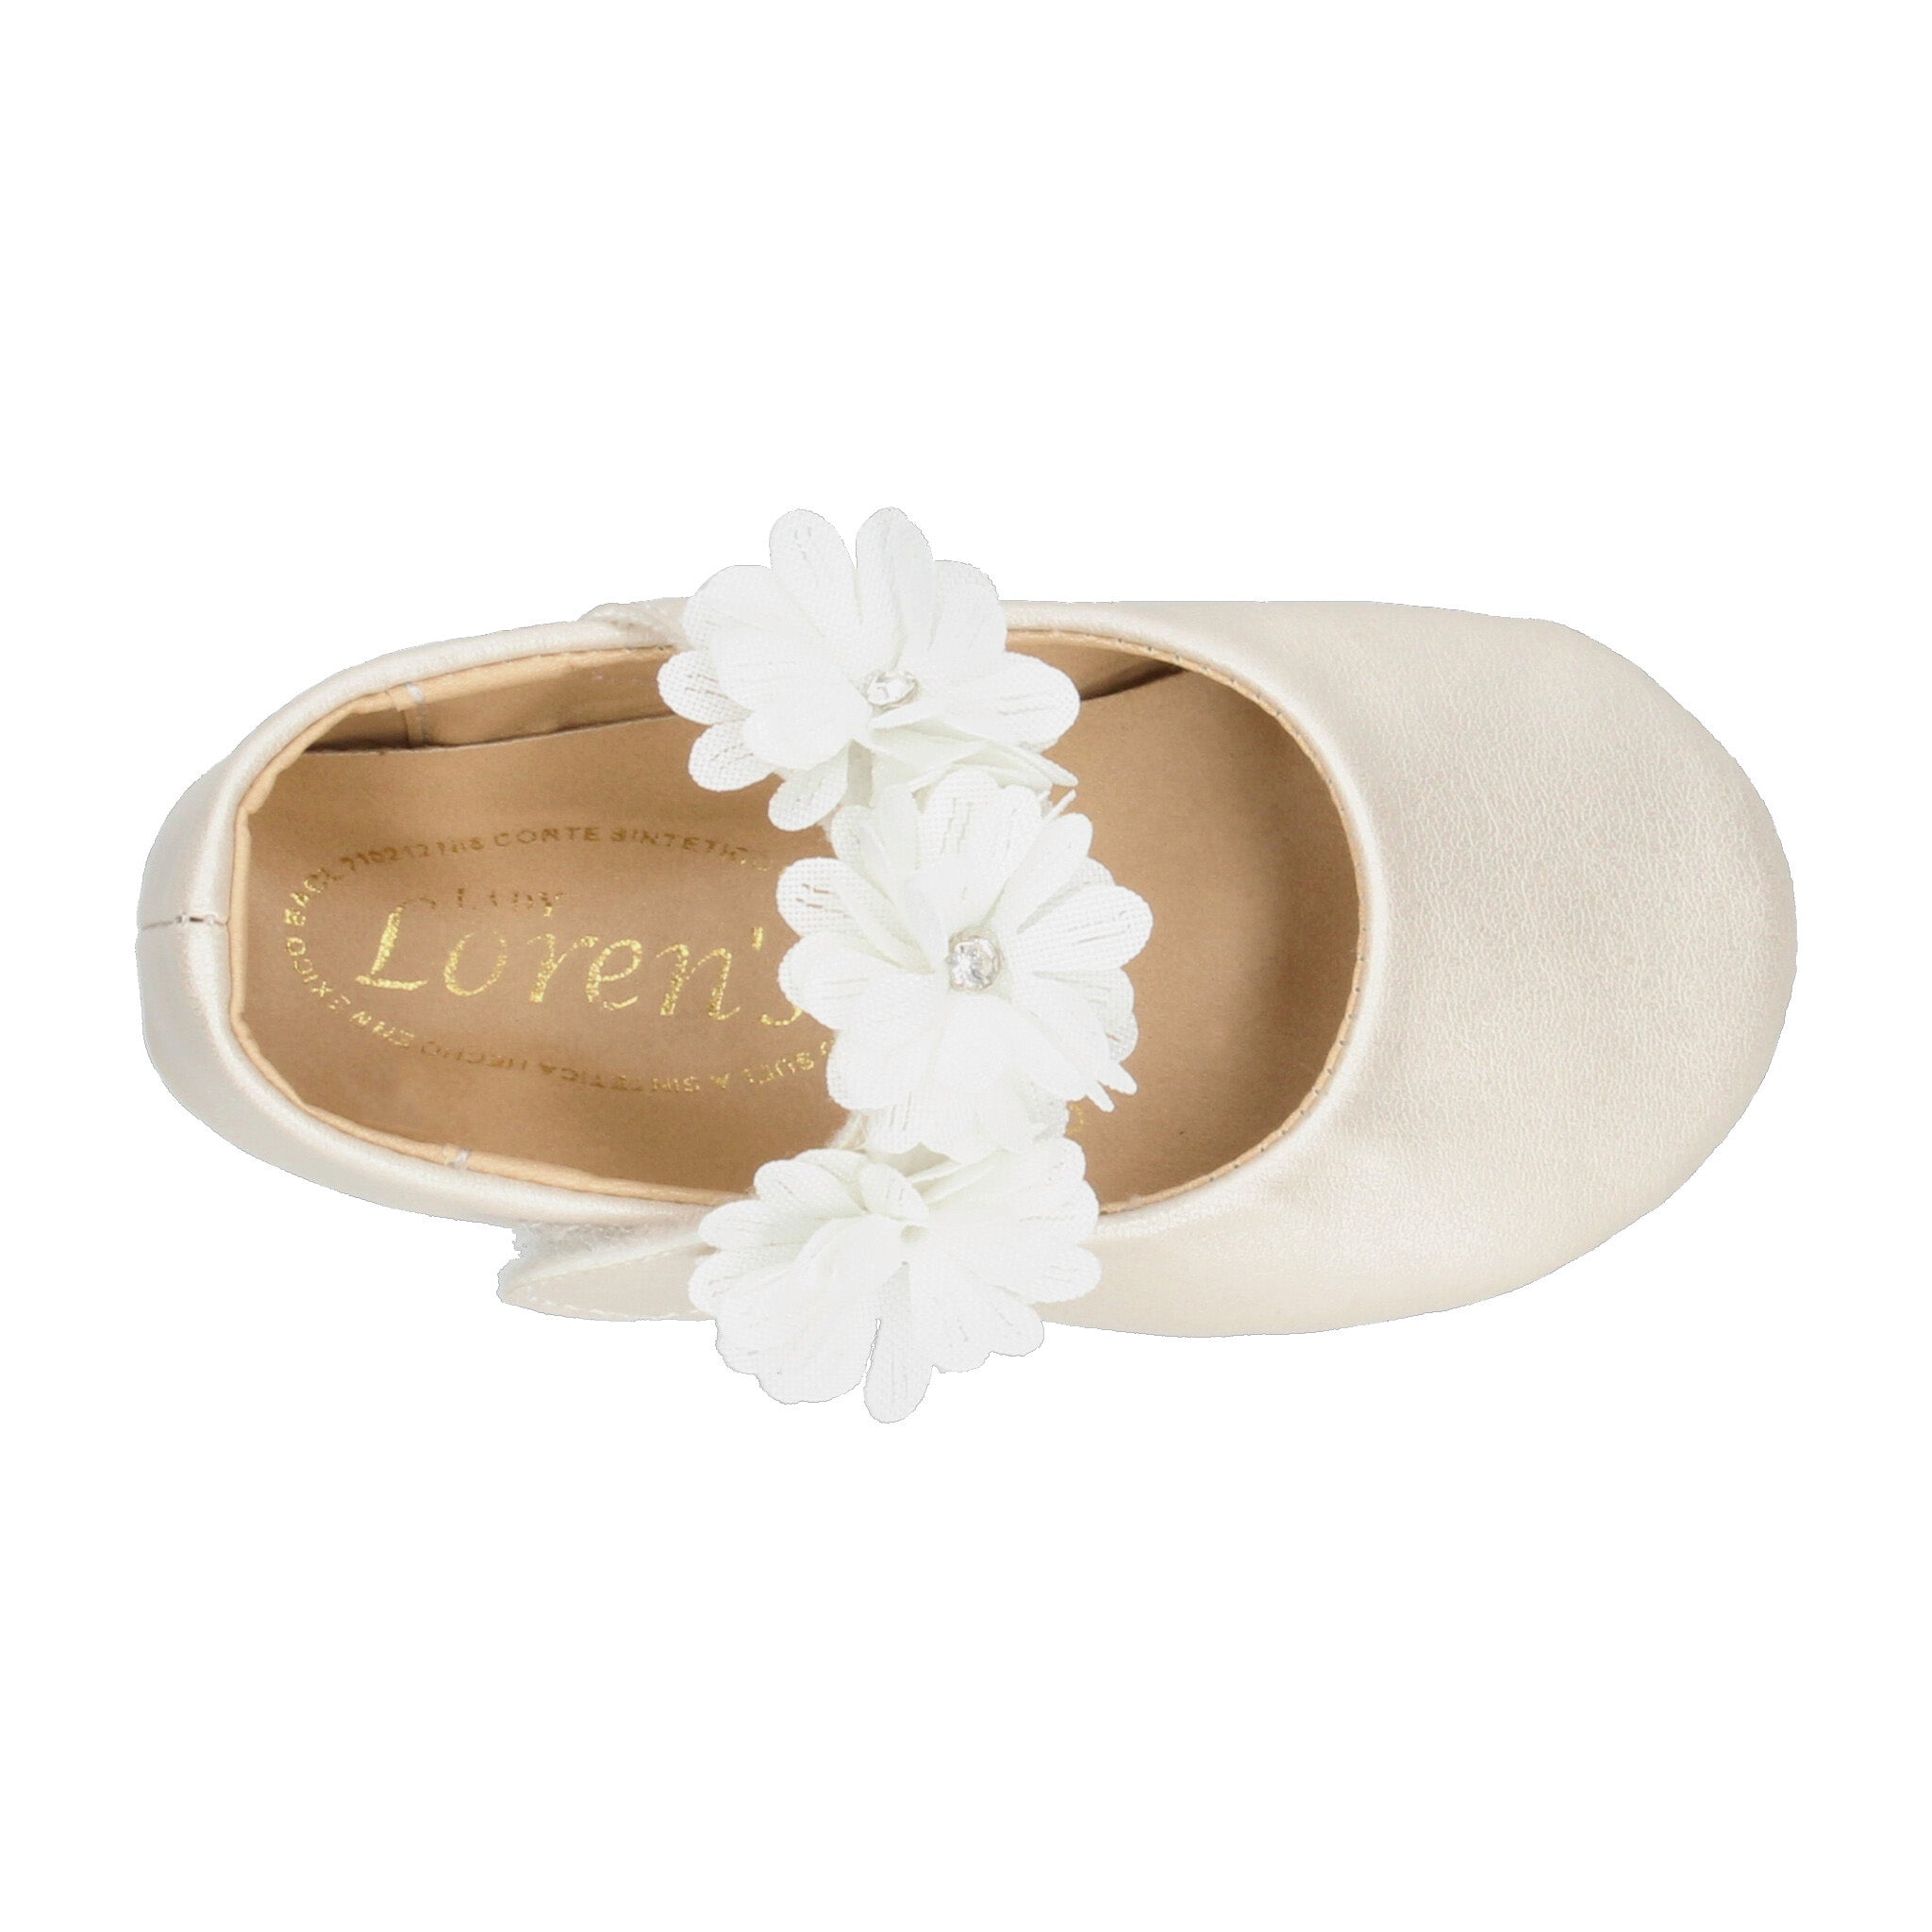 Zapato Ceremonia Lady loren's Beige para Niña [LDL60] LADY LOREN'S 